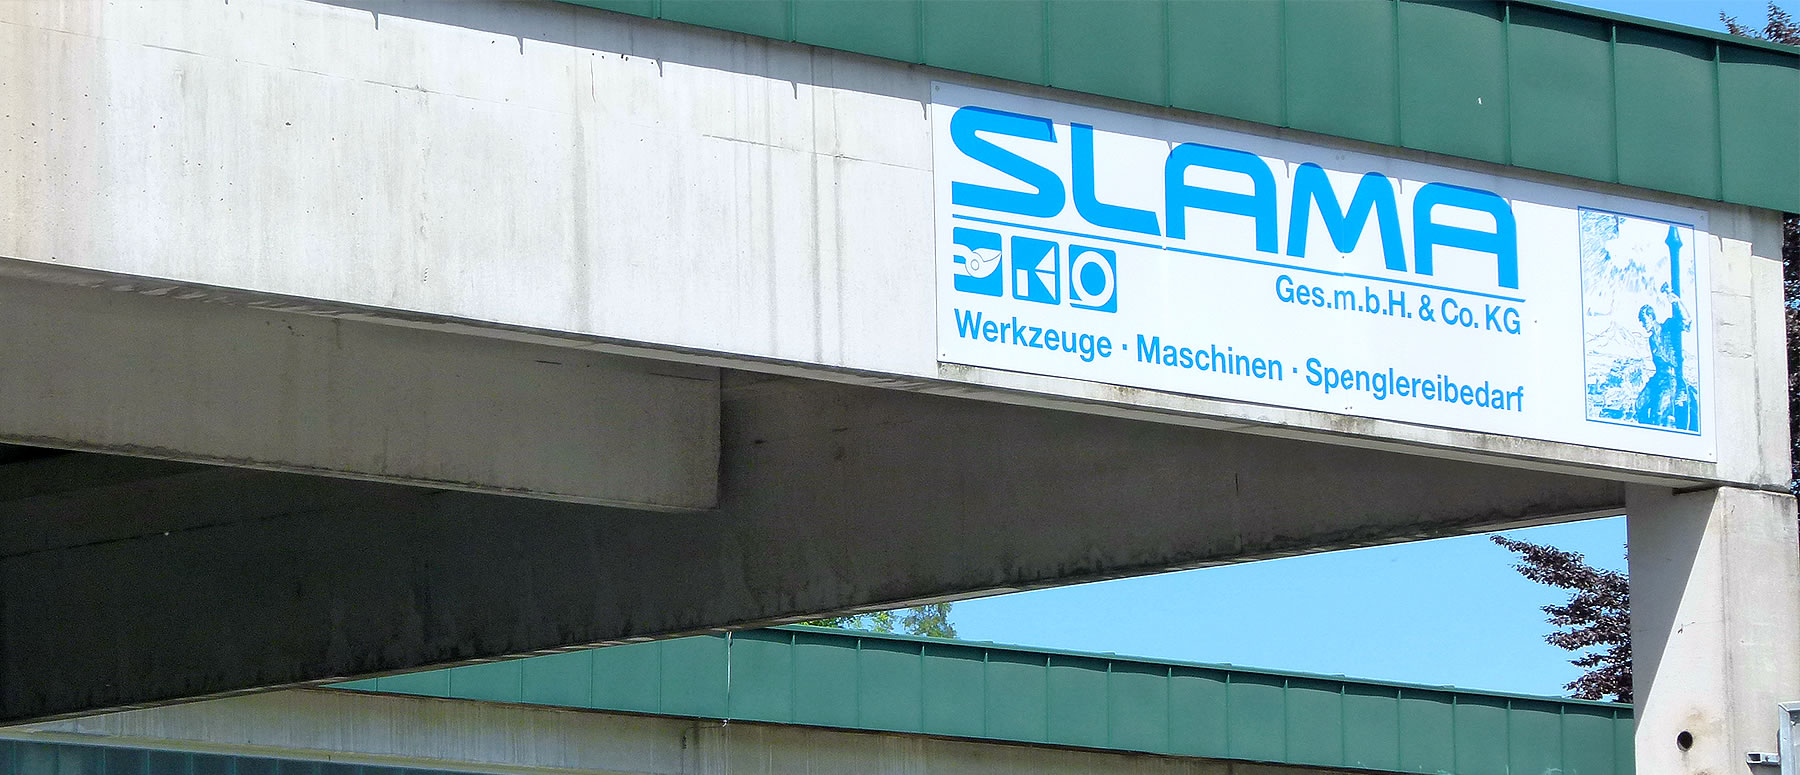 Detailfoto vom Firmensitz Slama Salzburg